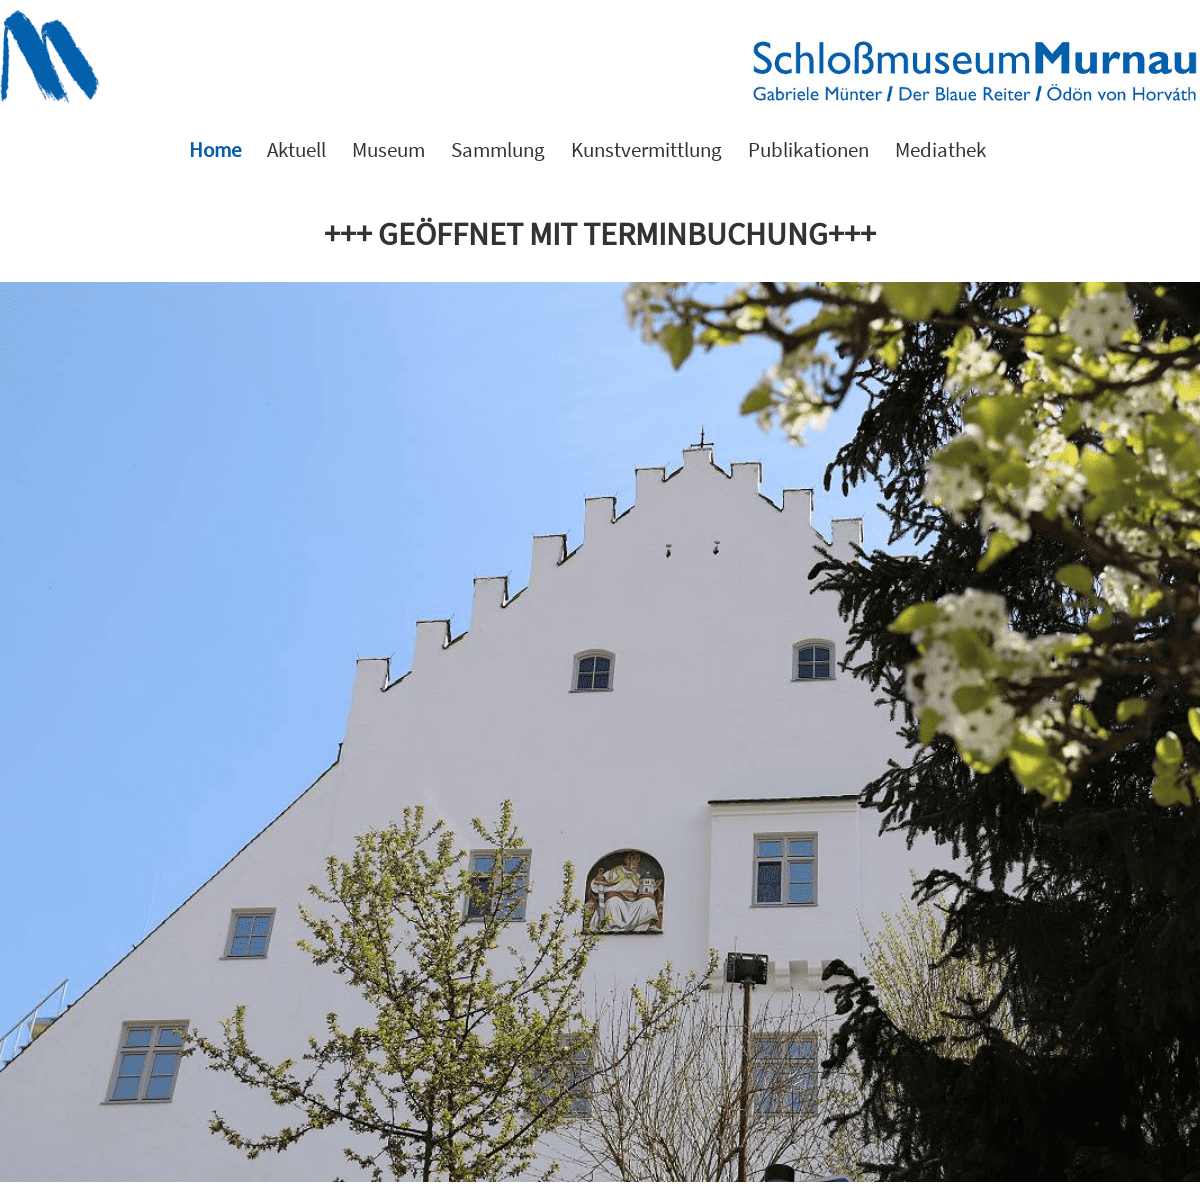 SchloÃŸmuseum Murnau- Gabriele MÃ¼nter - Der Blaue Reiter - Ã–dÃ¶n von HorvÃ¡th